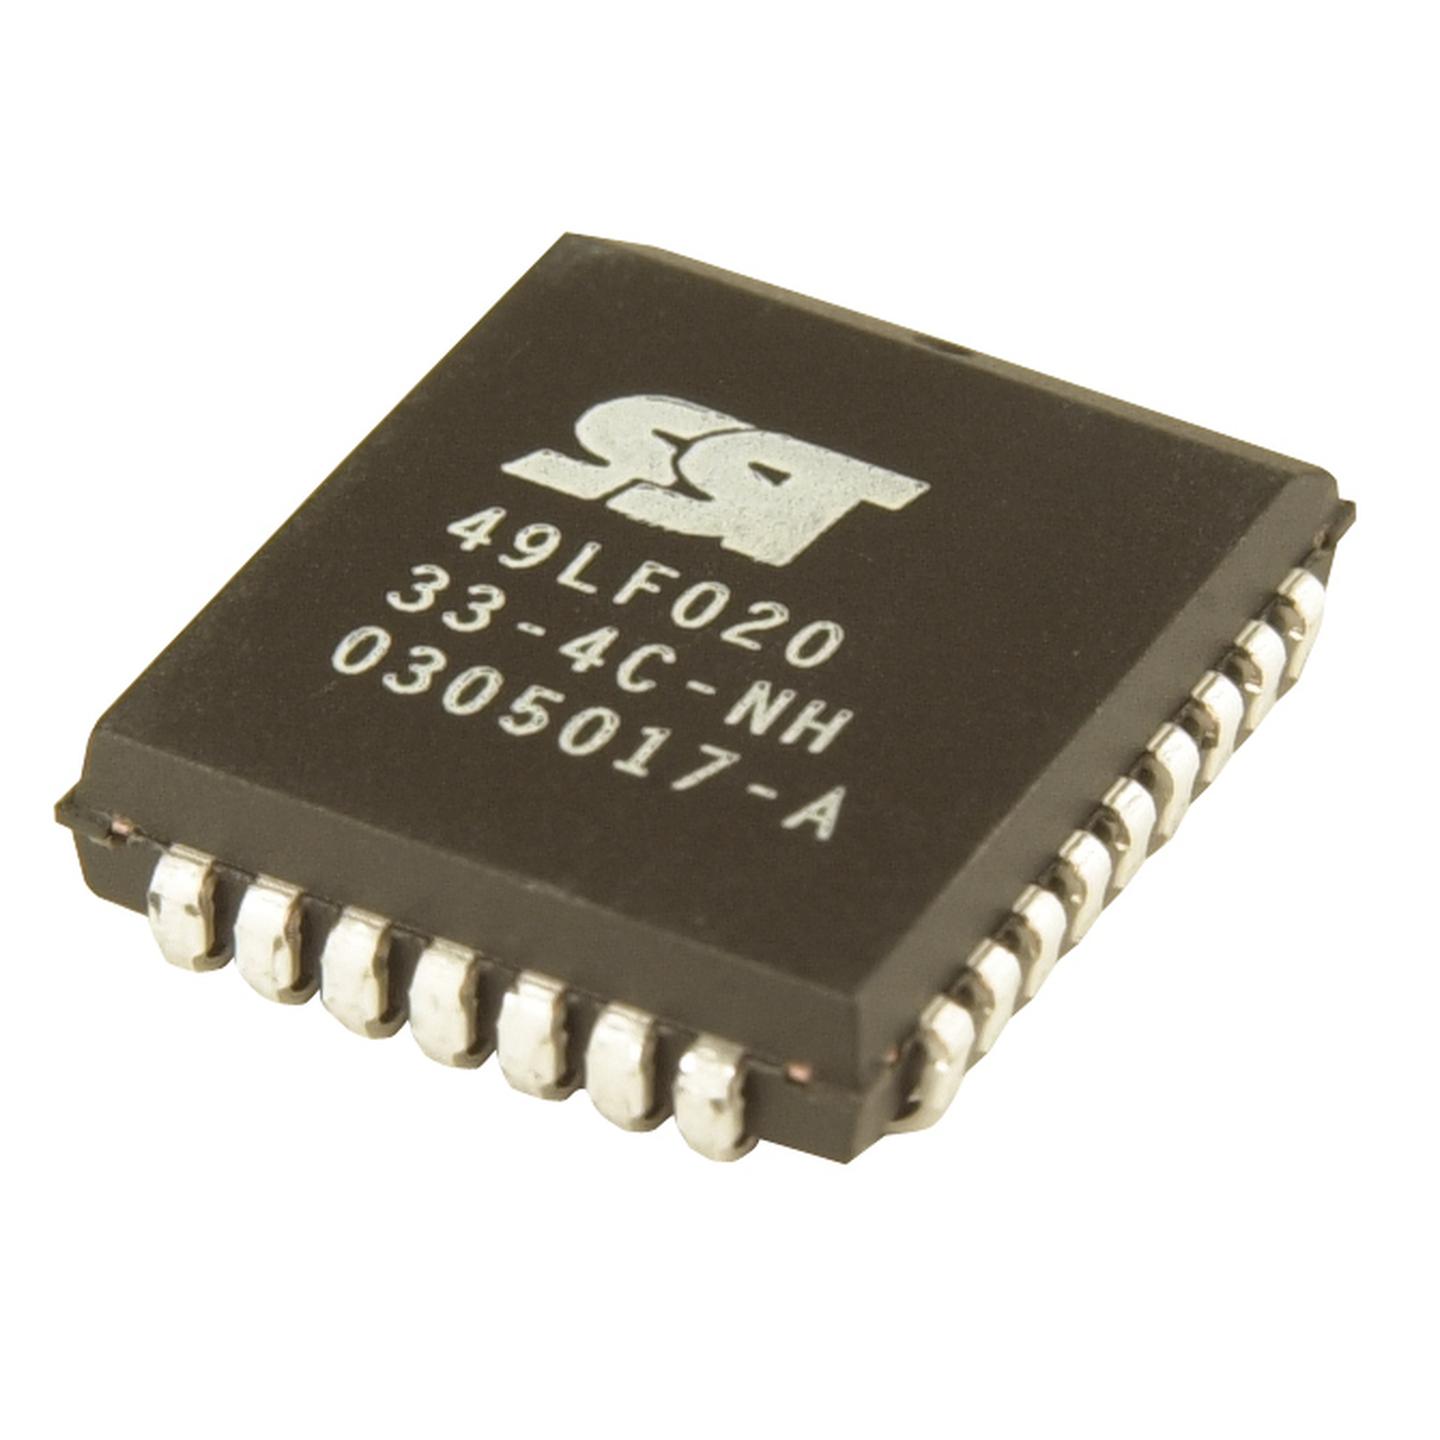 SST 49LF020 LPC Flash Memory